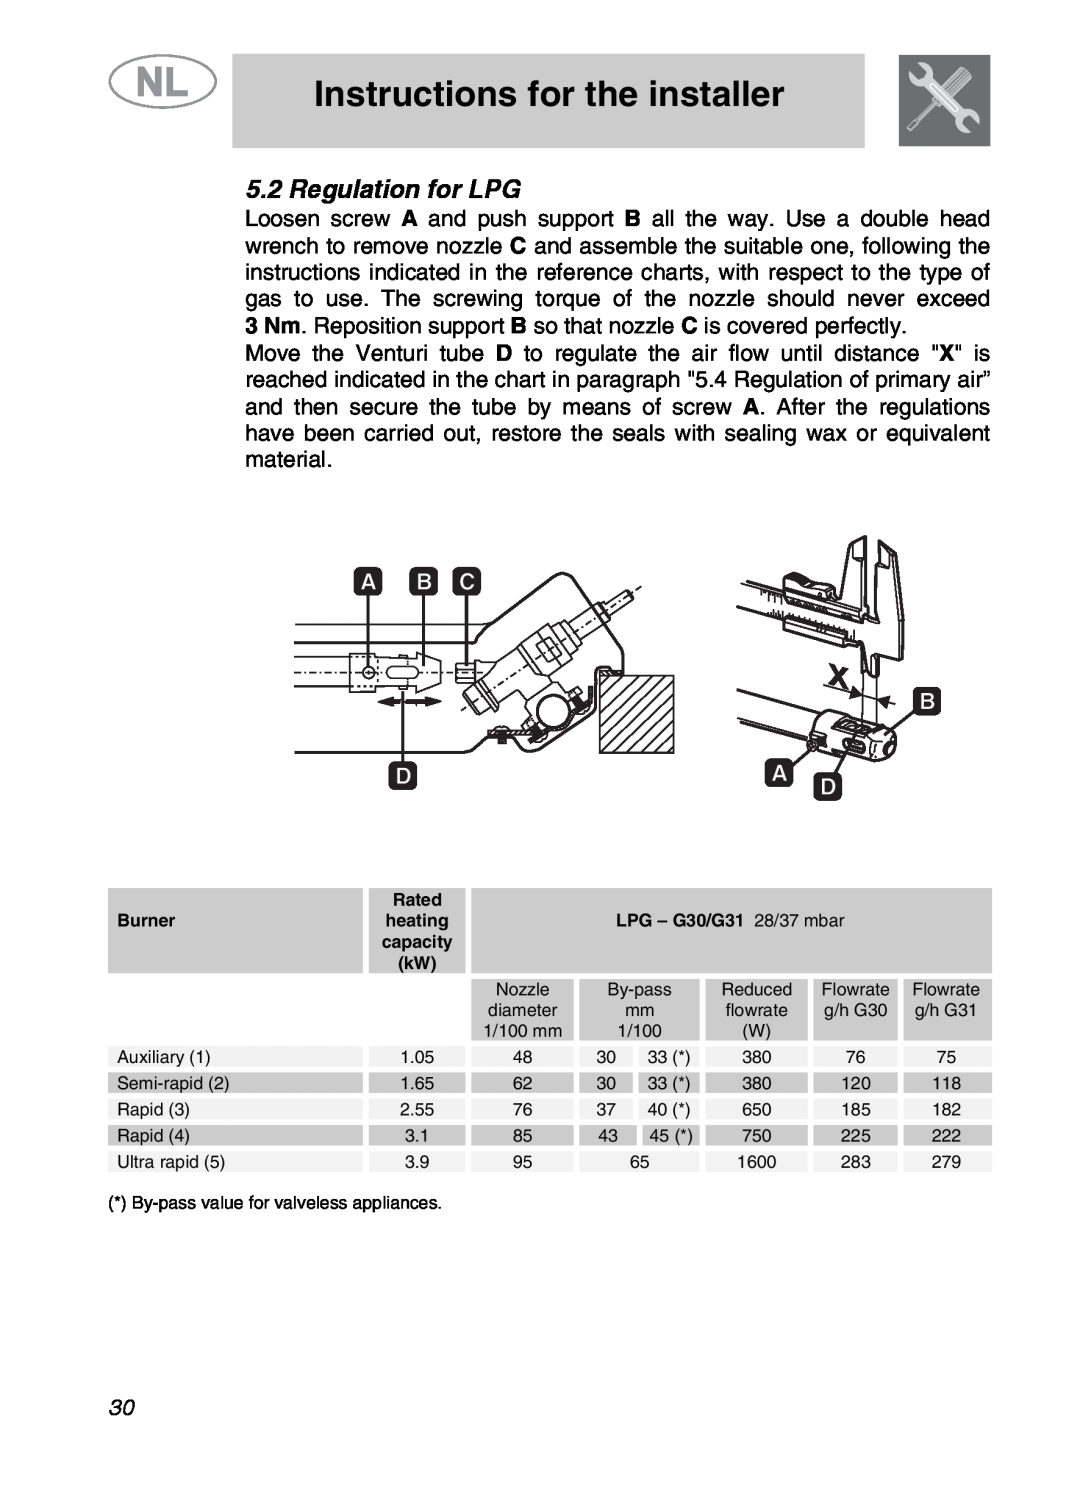 Smeg GKC641-3 manual Regulation for LPG, Instructions for the installer, Burner, Rated heating capacity kW 